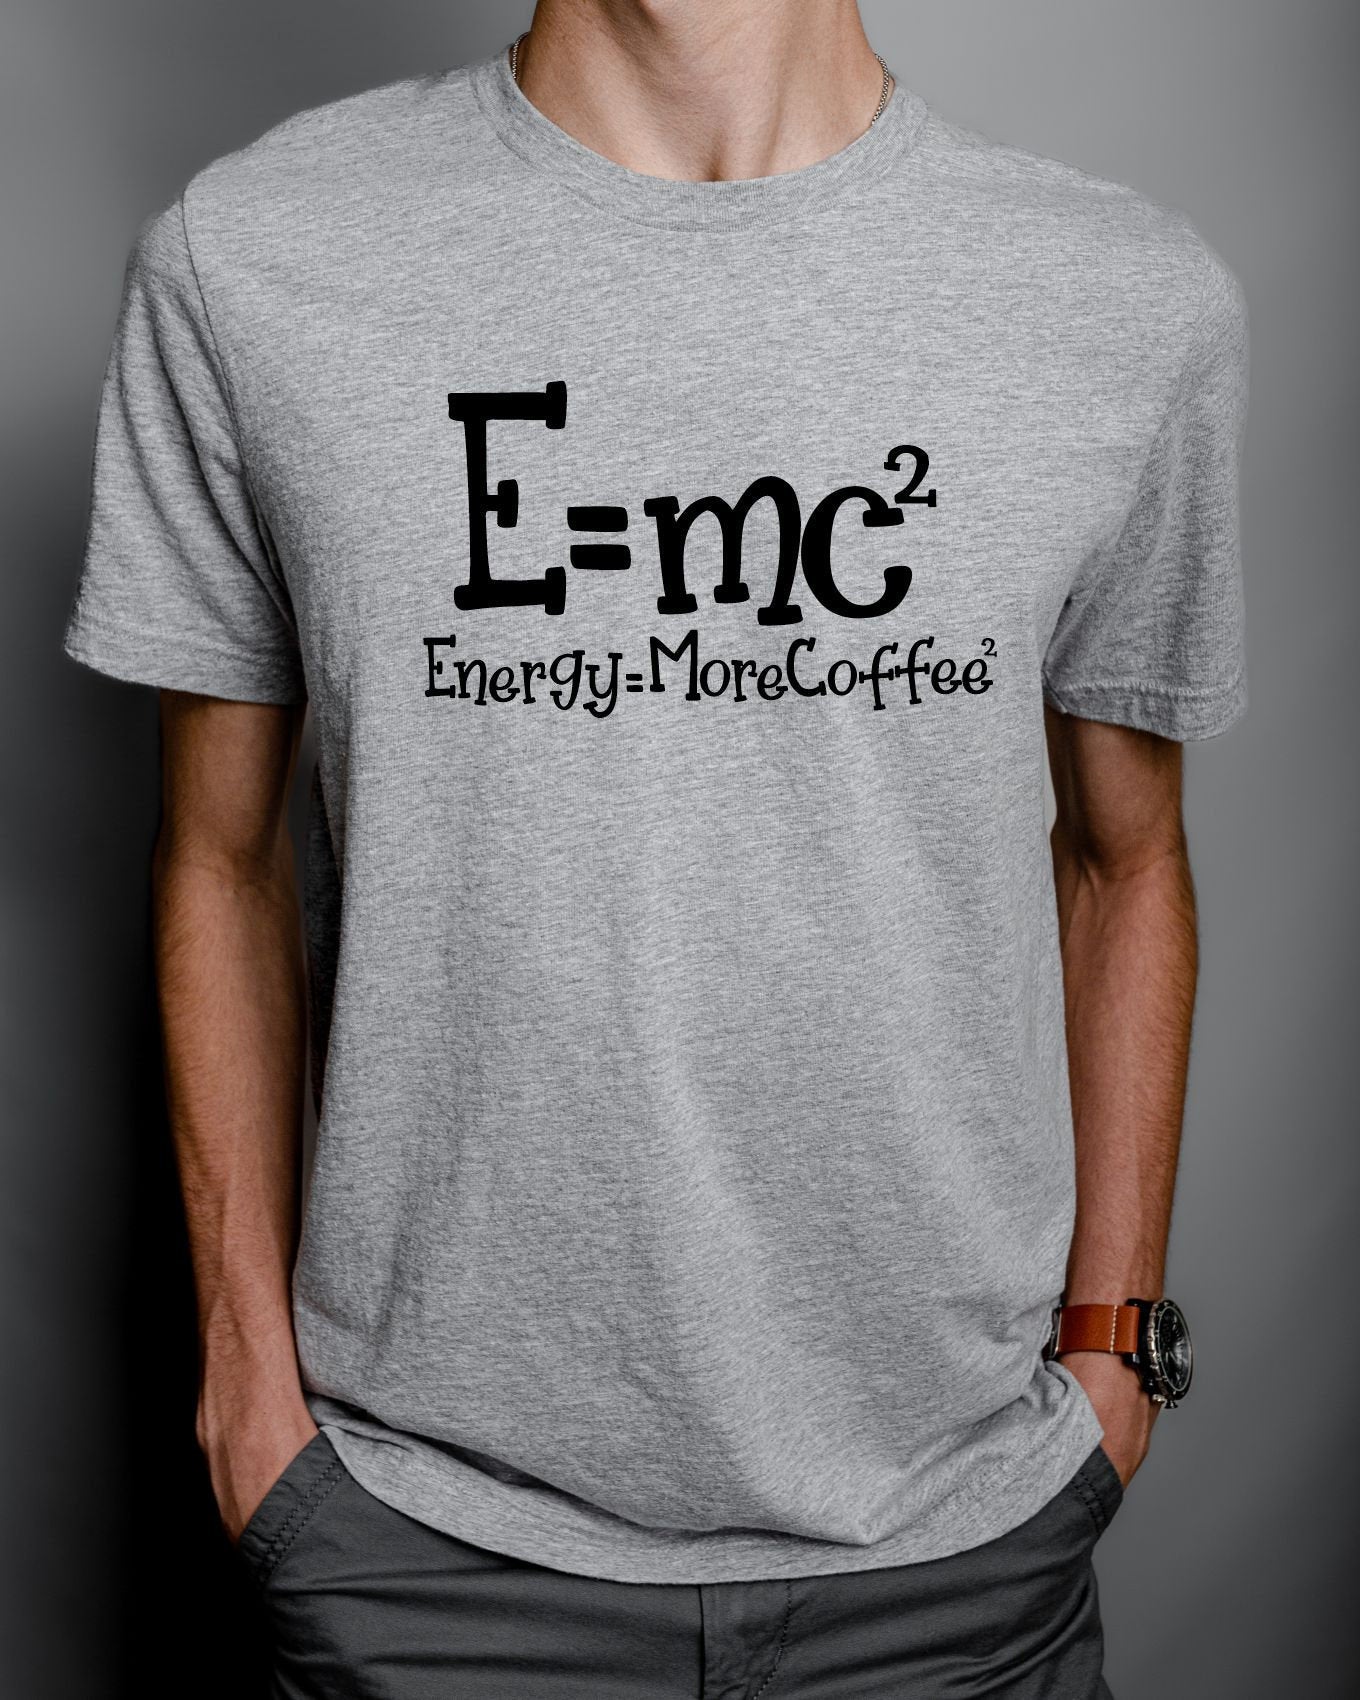 Funny Coffee Shirt, E=mc2 Energy = more coffee, Science Teacher, coffee lover, science geek, gift for boyfriend, math teacher - SBS T Shop